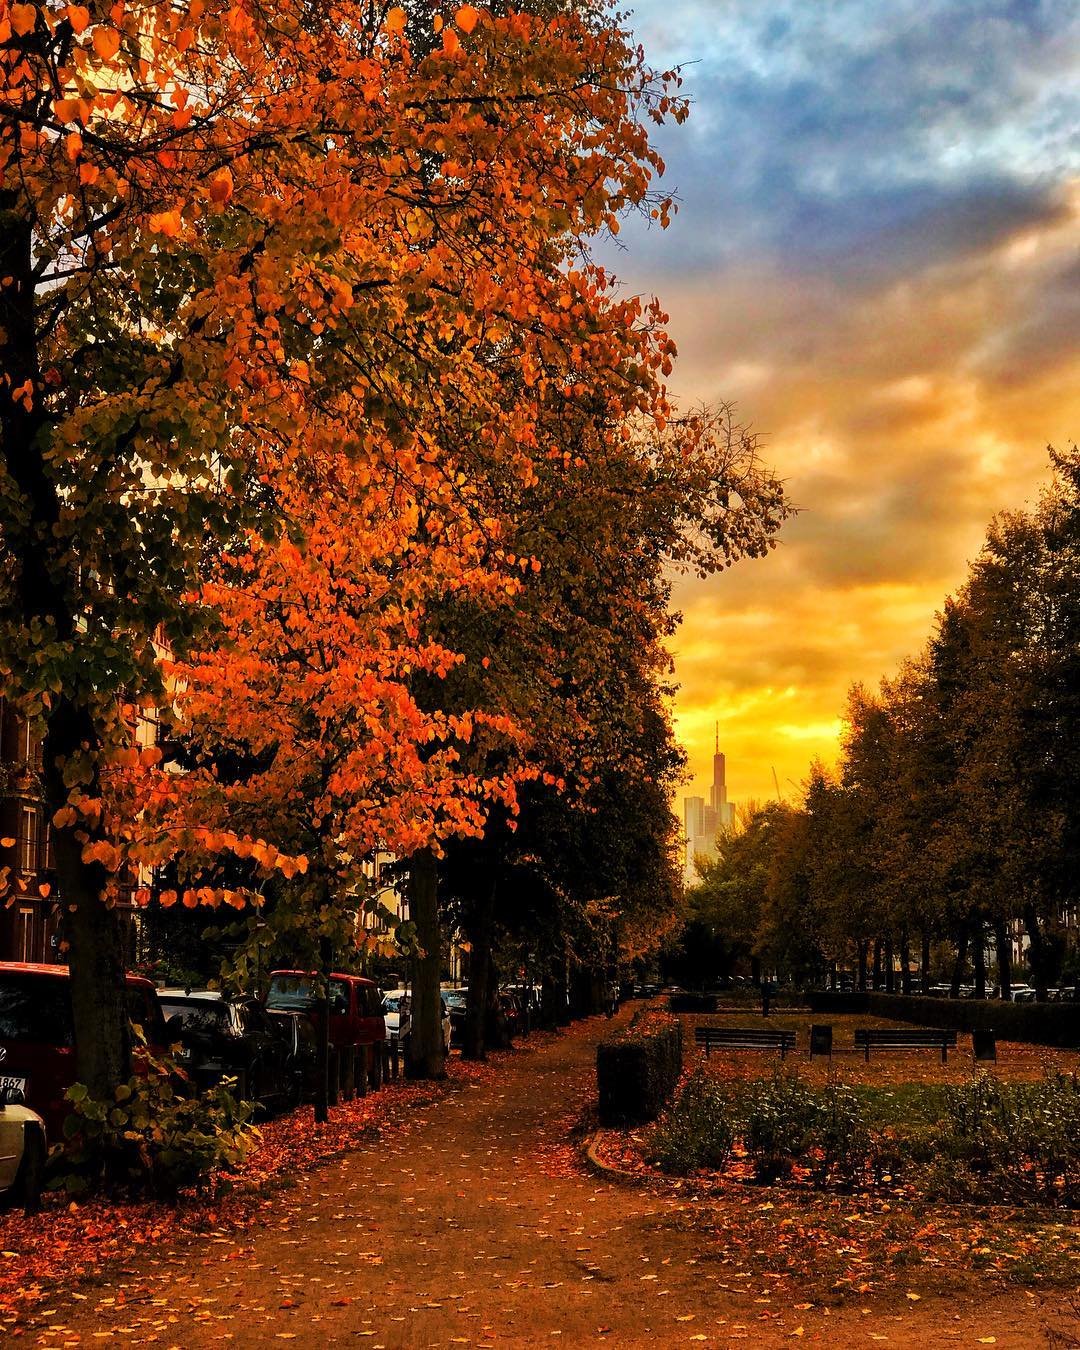 Fall in Frankfurt #frankfurtgermany #autumn #fall #foliage #leaves #dusk #magichour #snapseed #iphone7plus #deutschland #germany #cloudporn #moodygrams #agameoftones #orange #yellow